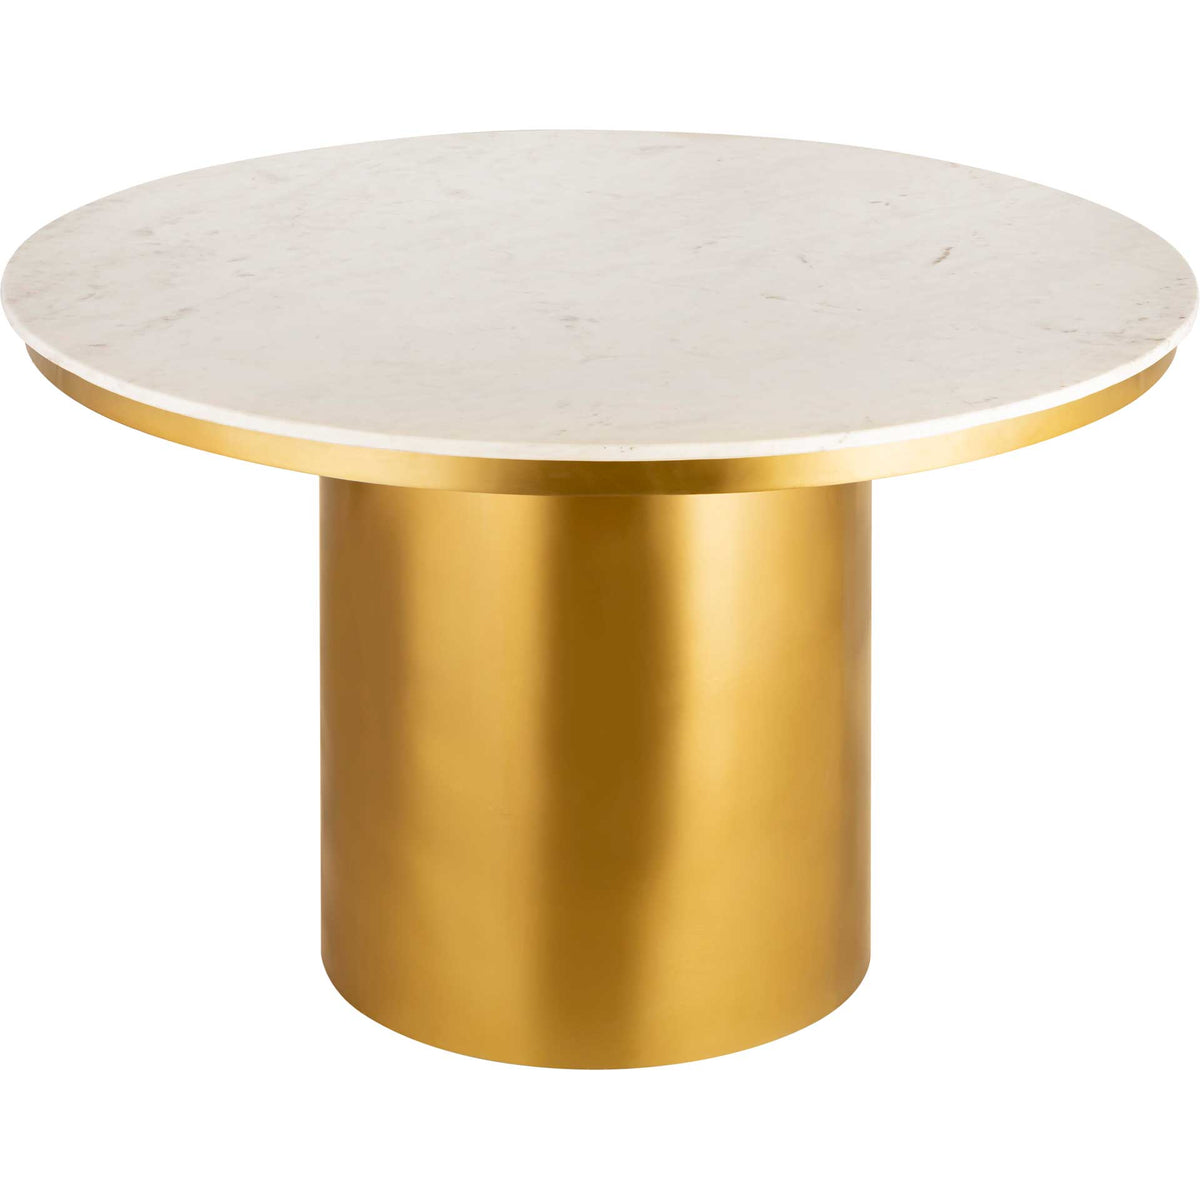 Alisha Marble Dining Table Gold/White